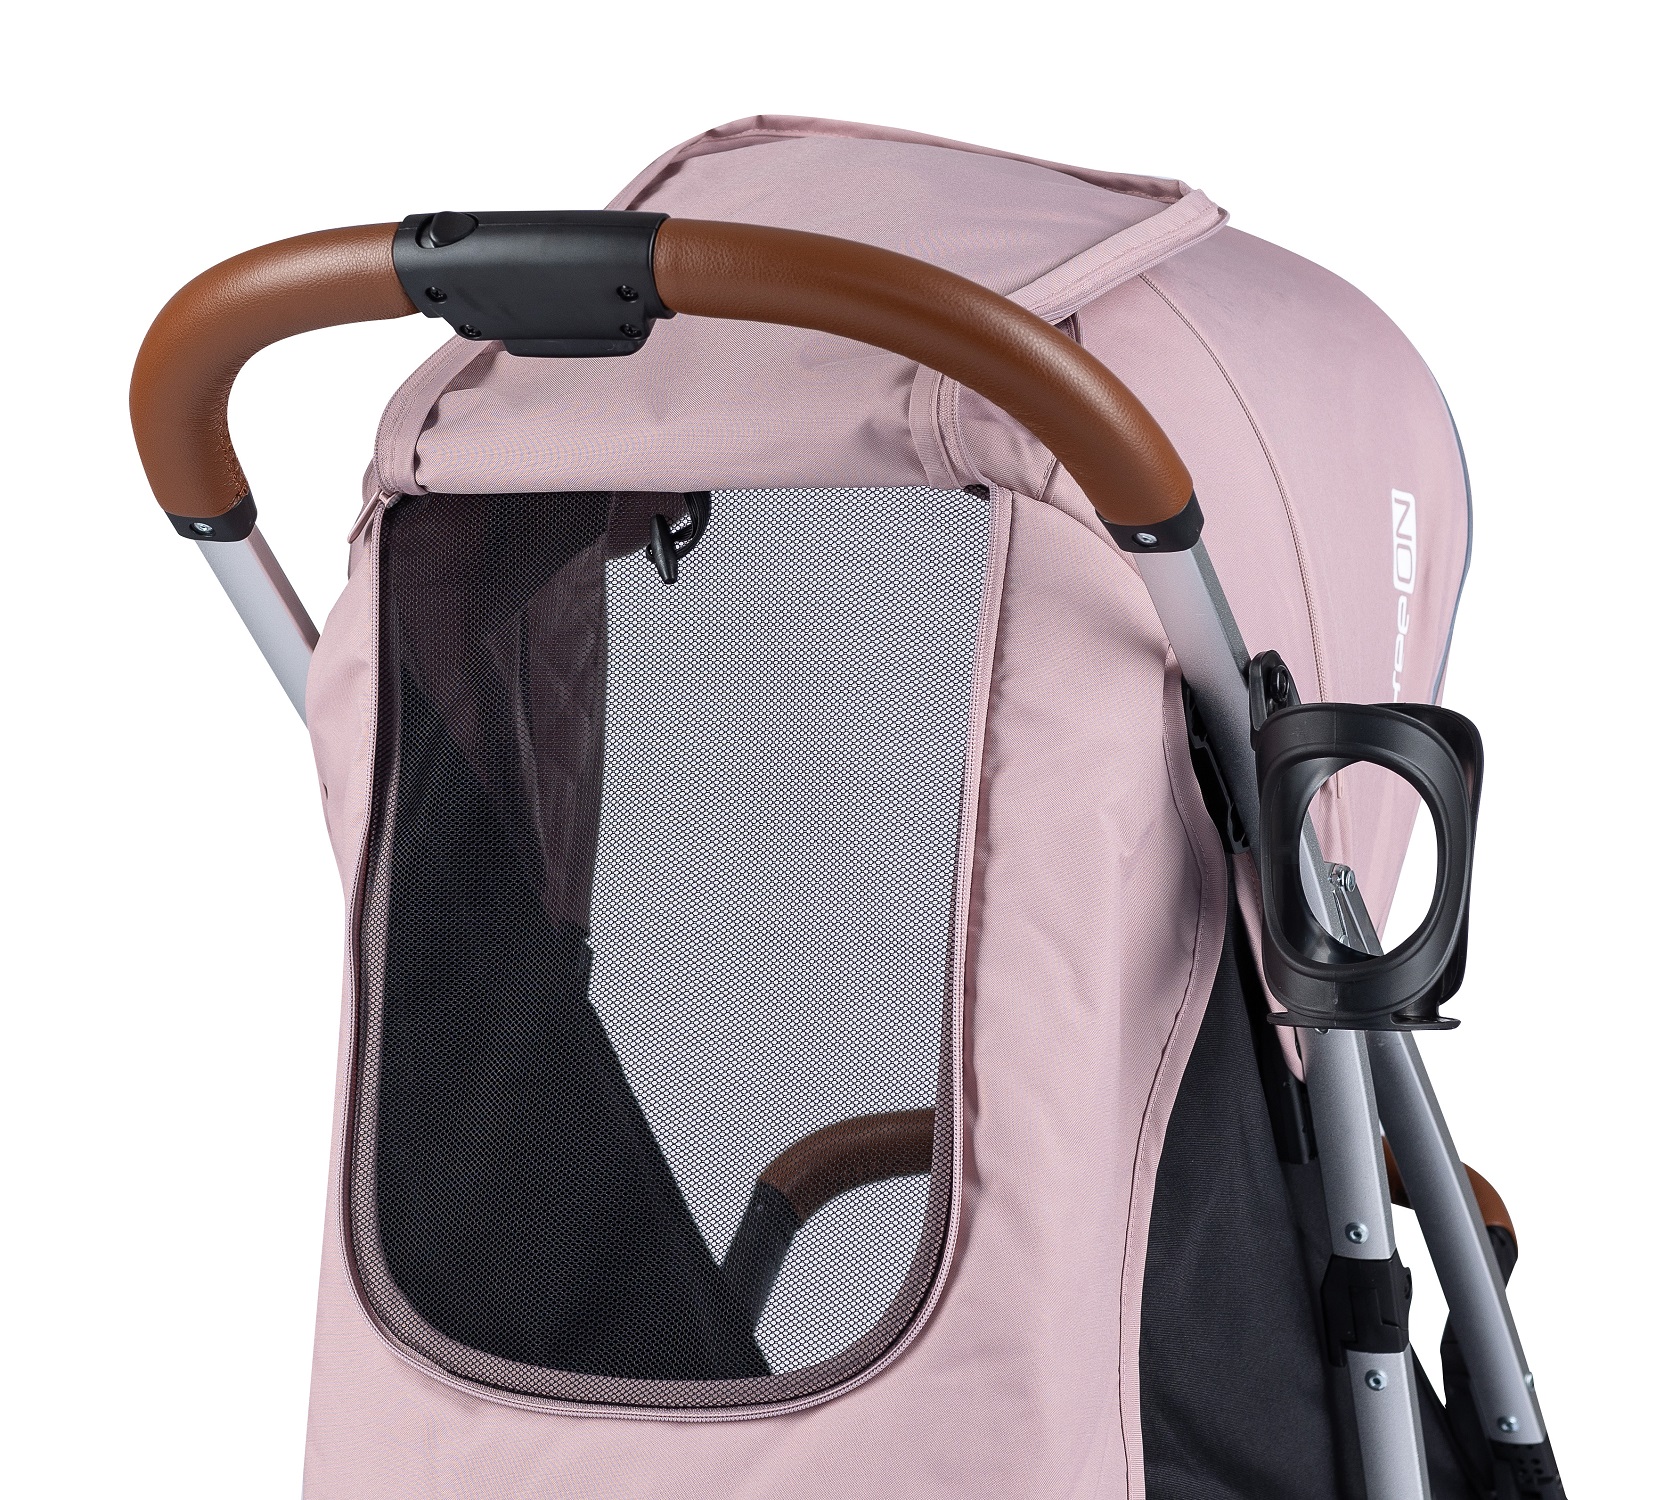 Прогулочная коляска для ребенка FreeON LUX Premium Dusty Pink-Black - фото 5